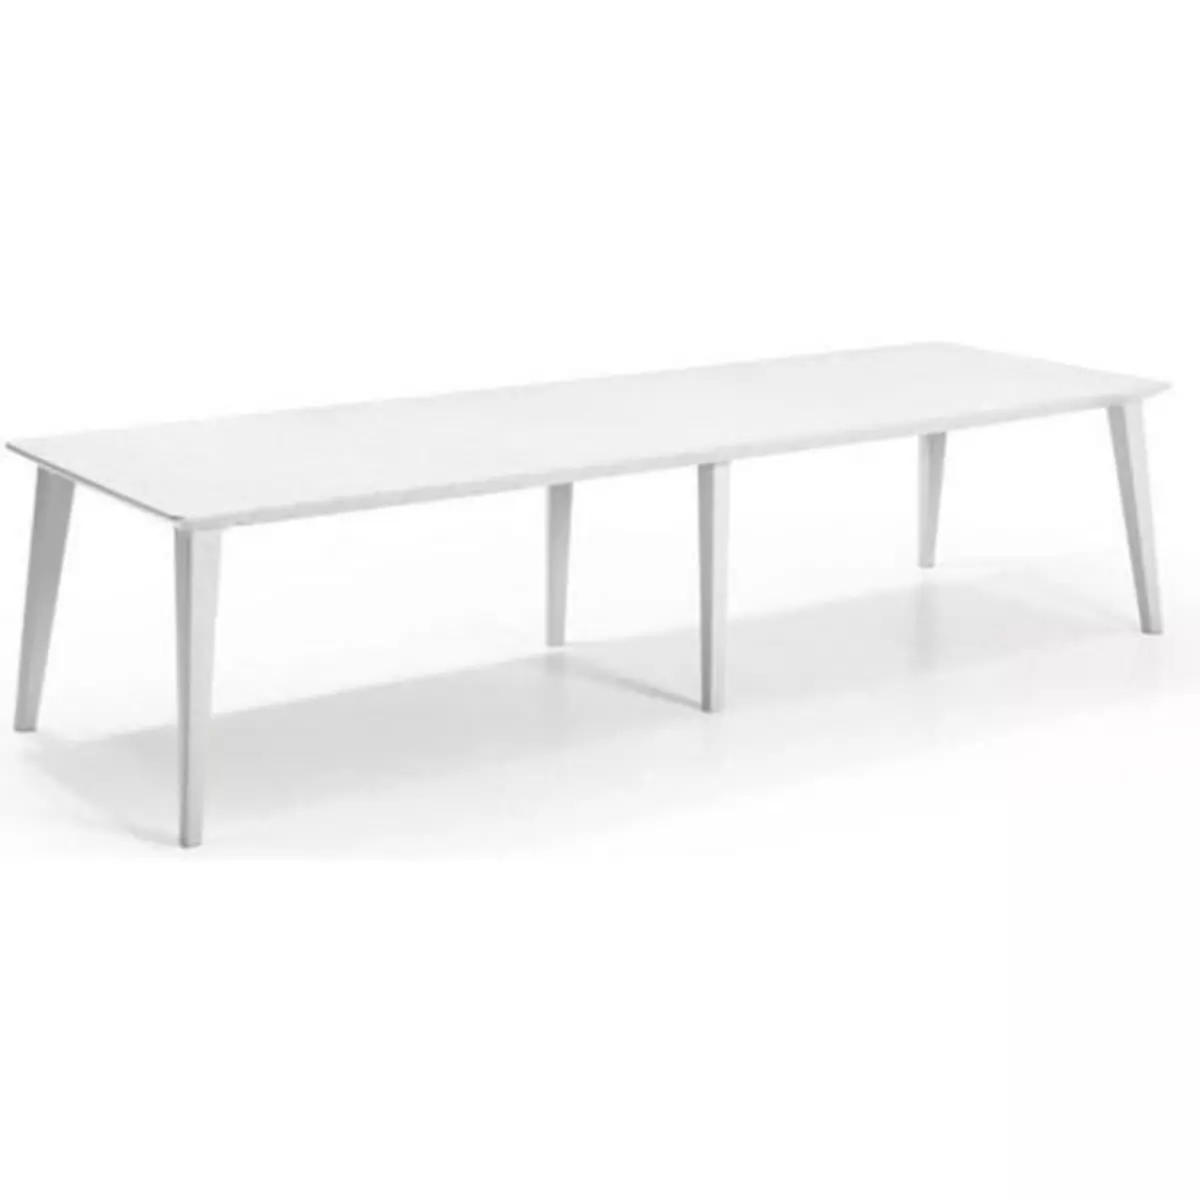 ALLIBERT by KETER Table de jardin - rectangulaire - blanc - en résine - 8 a 10 personnes - Lima - Allibert by KETER